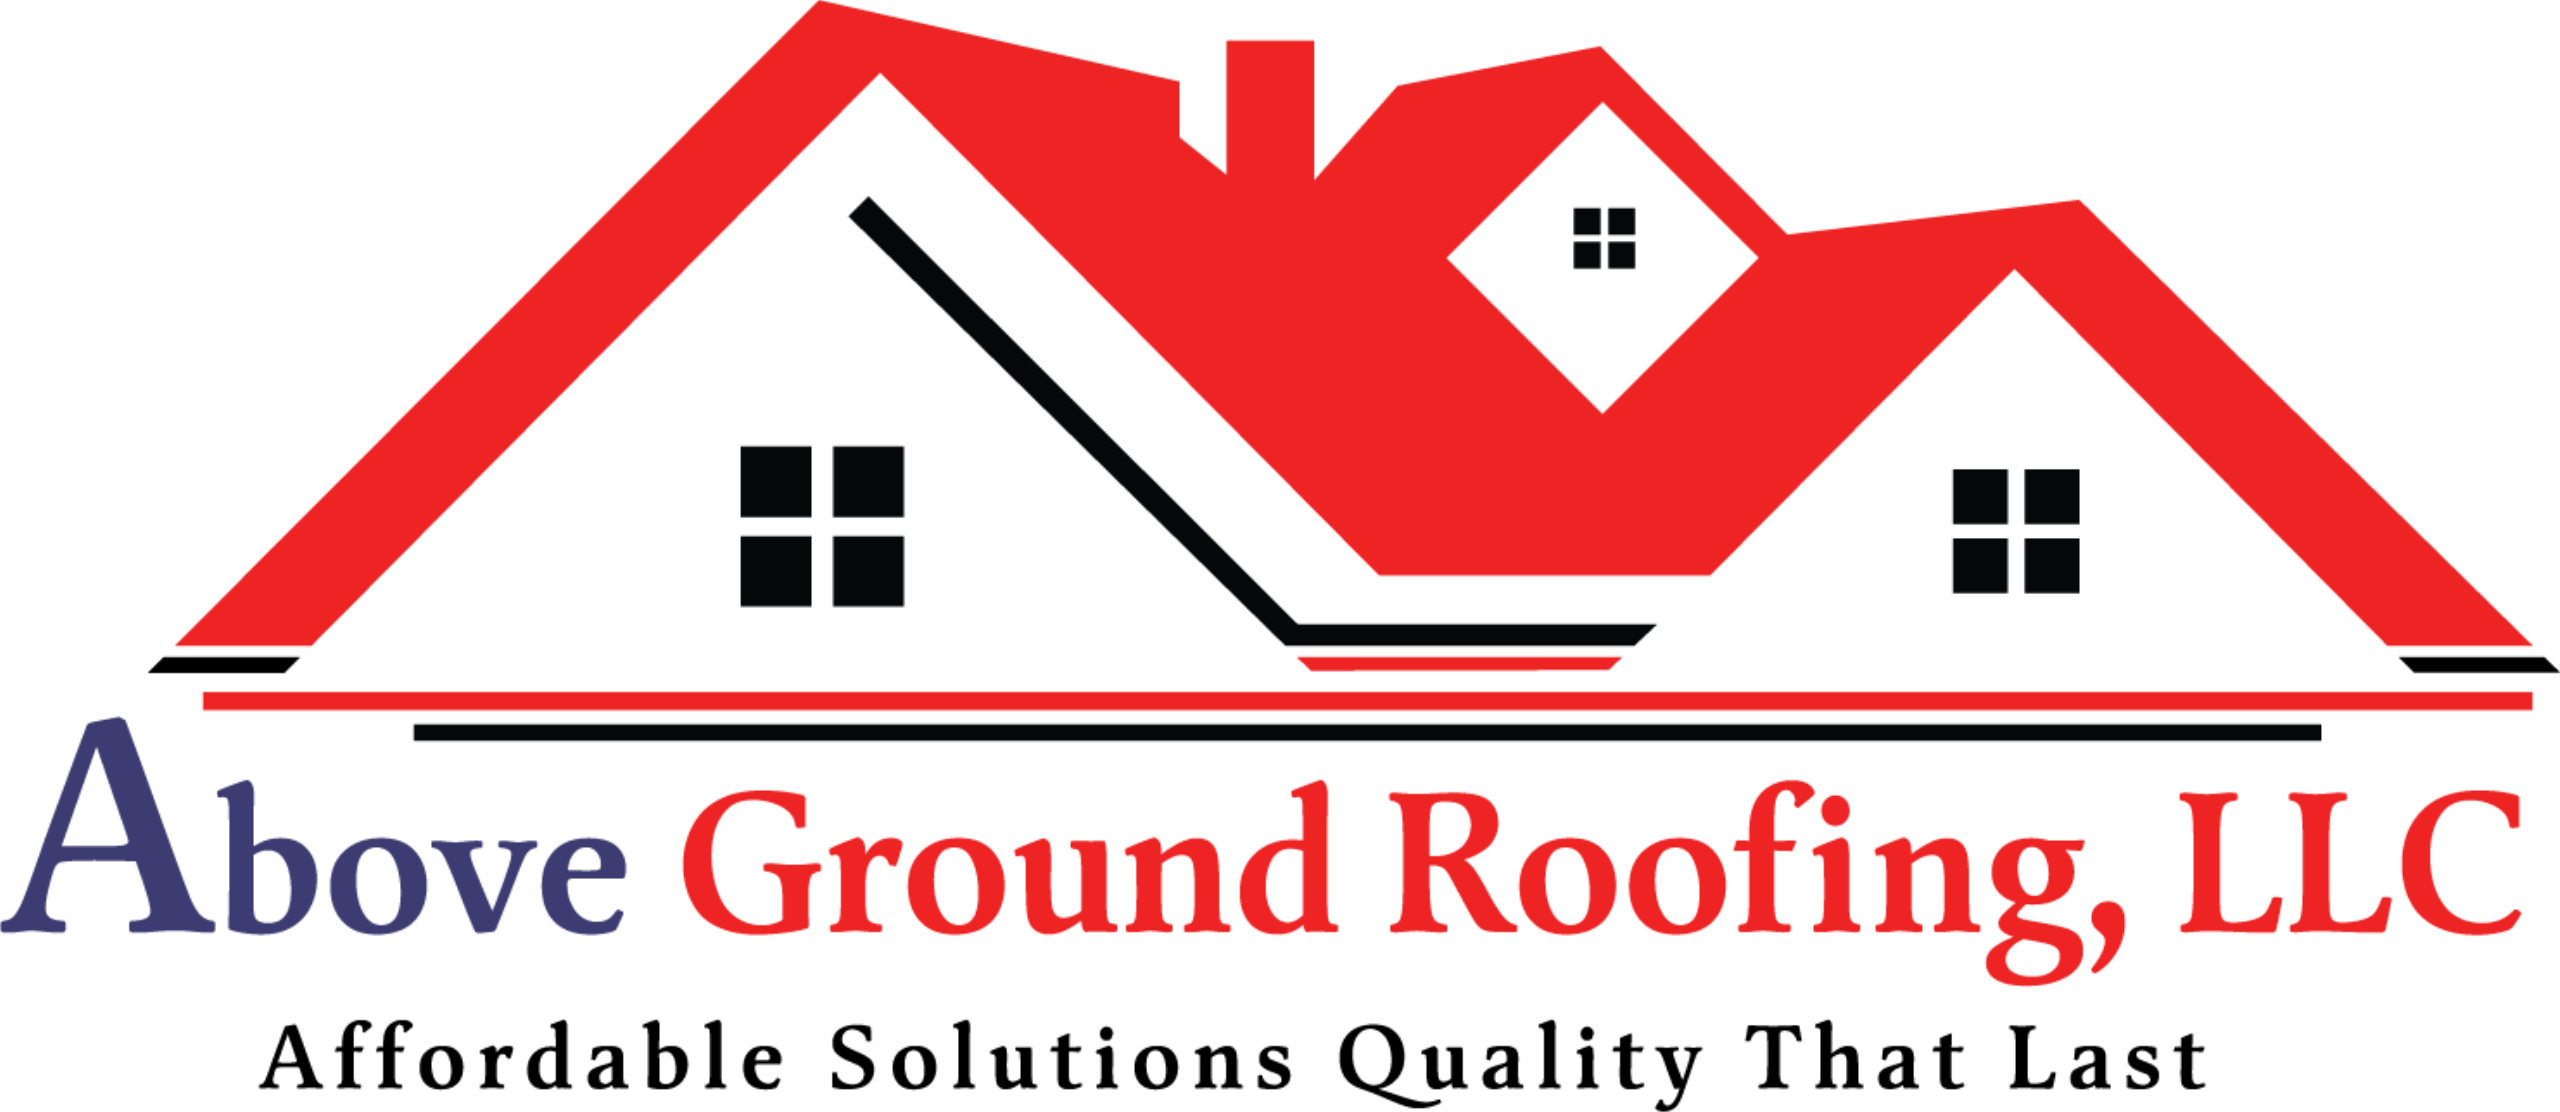 Above Ground Roofing, LLC Logo